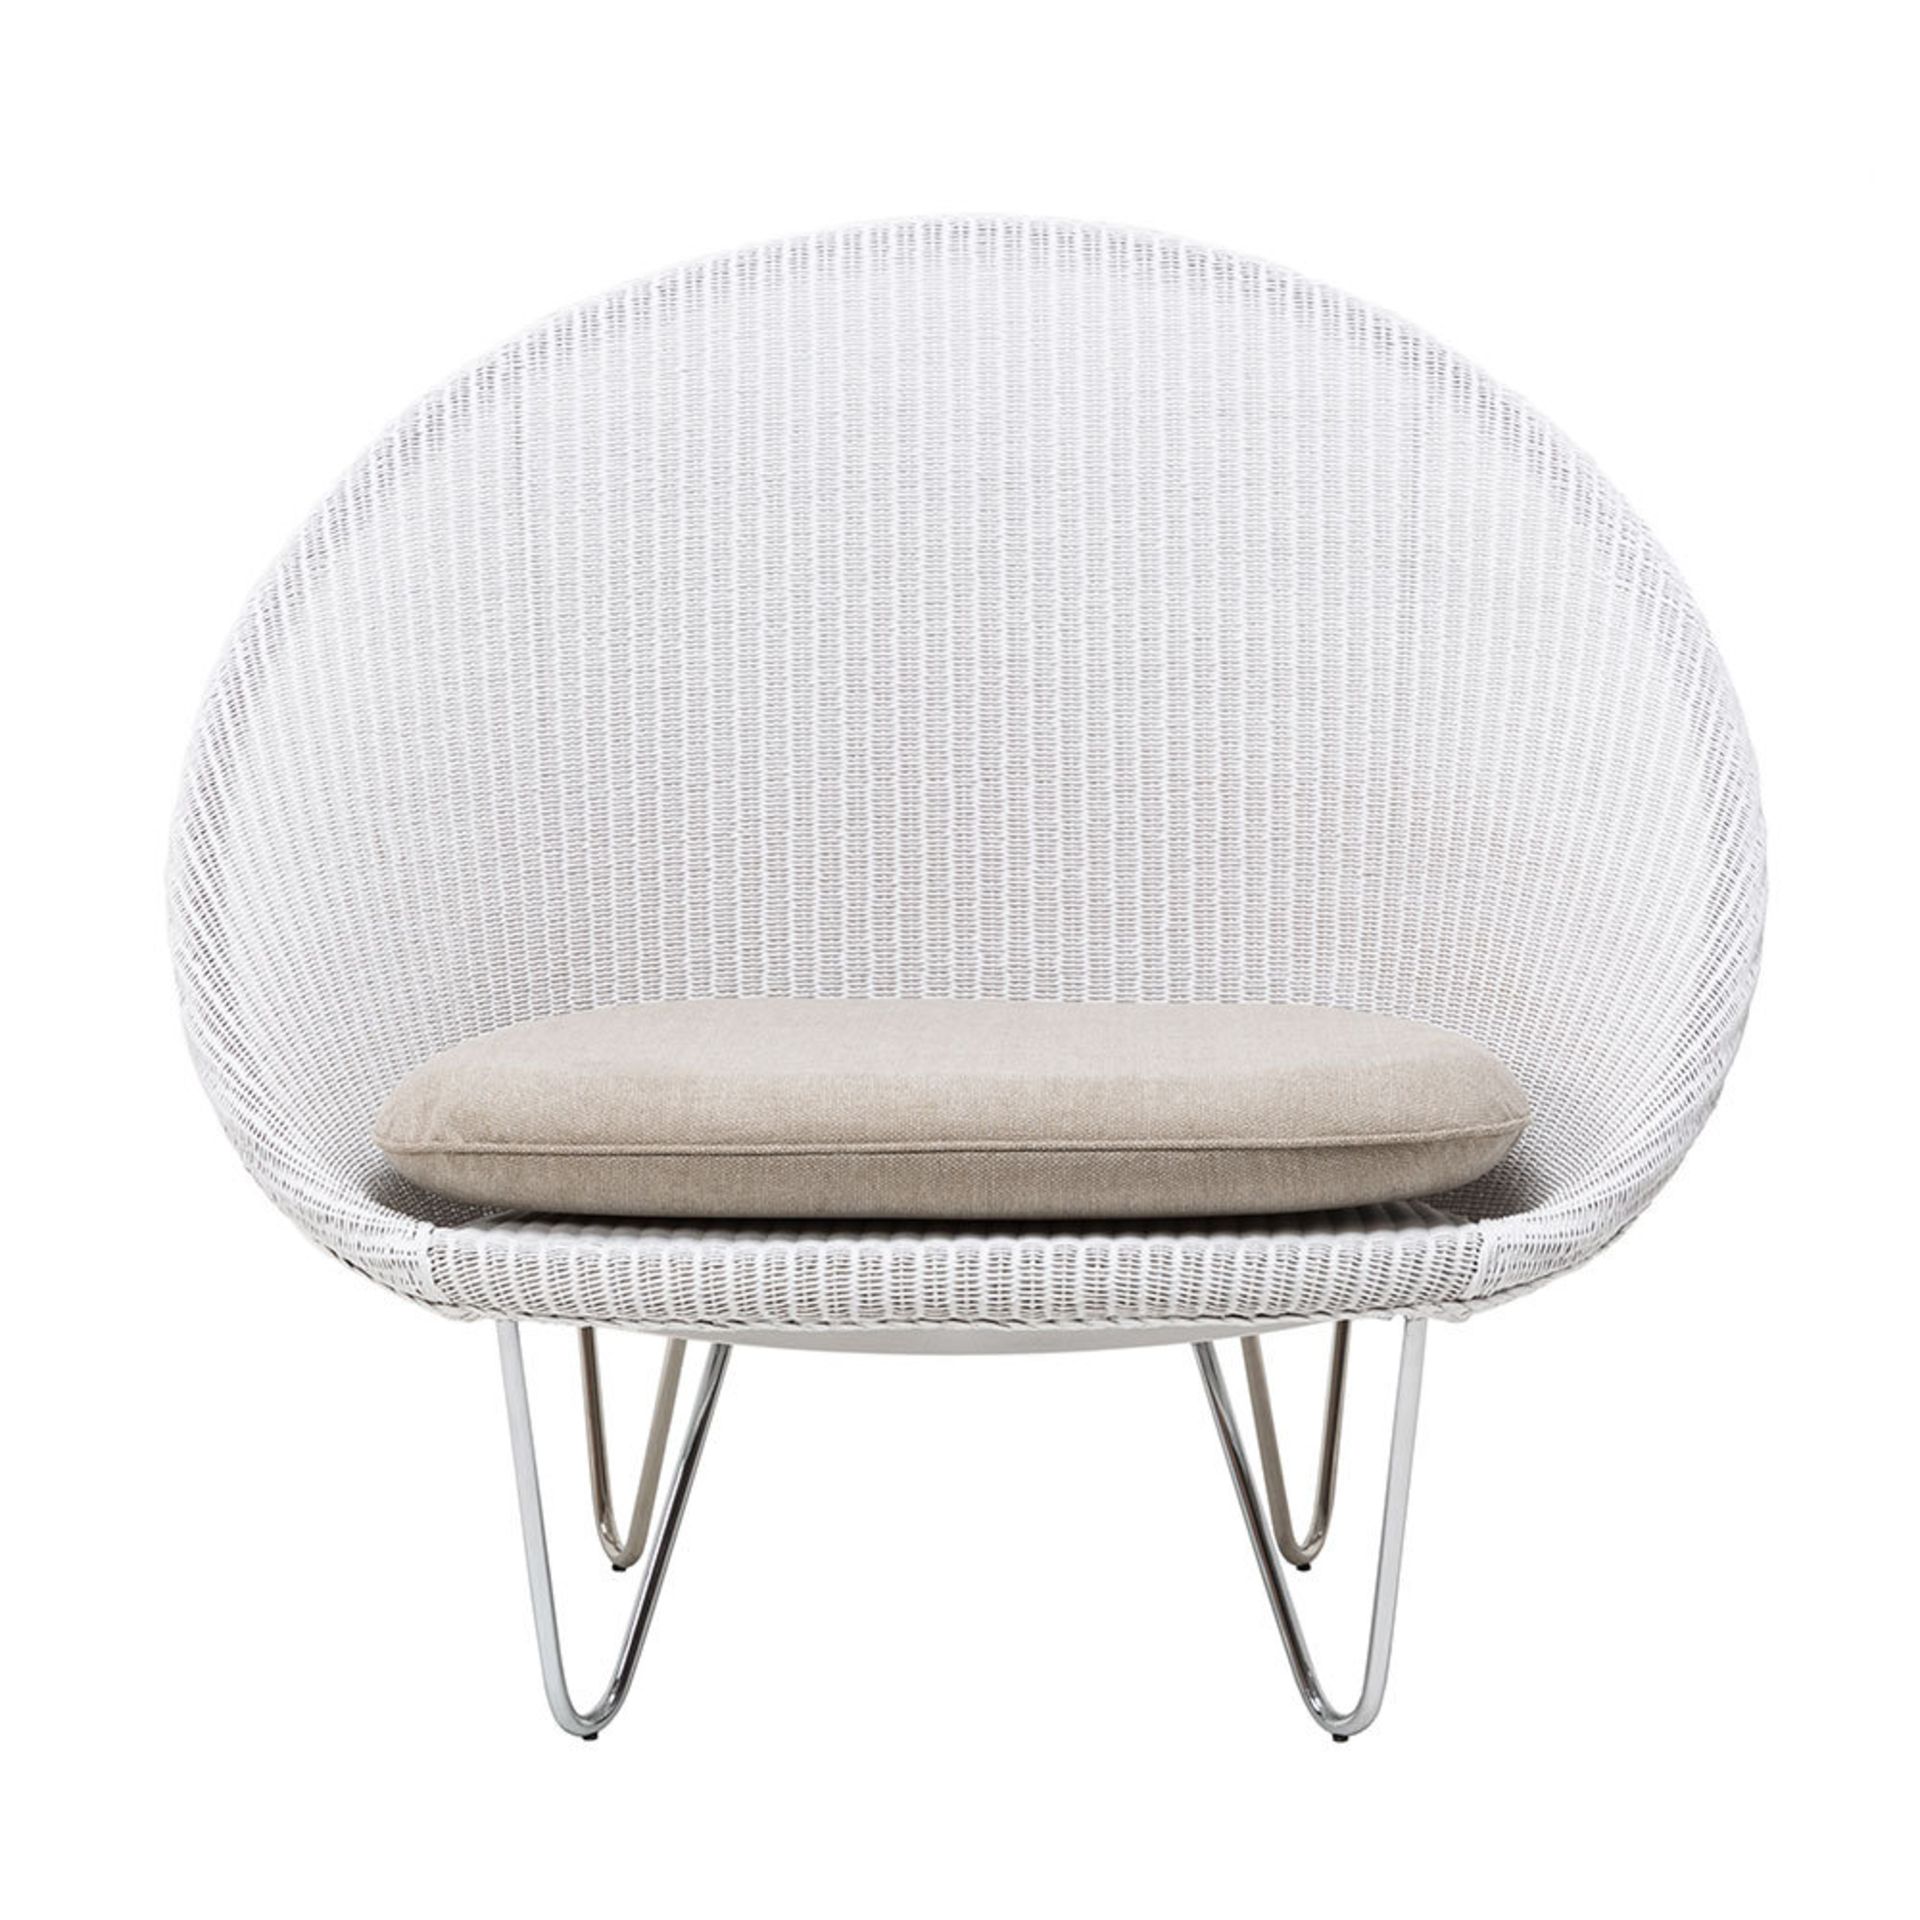 1 x Joe Cocoon Tub Chair by Vincent Shepherd - Snow Lloyd Loom With Geneva Seat Cushion - RRP £668! - Image 4 of 6